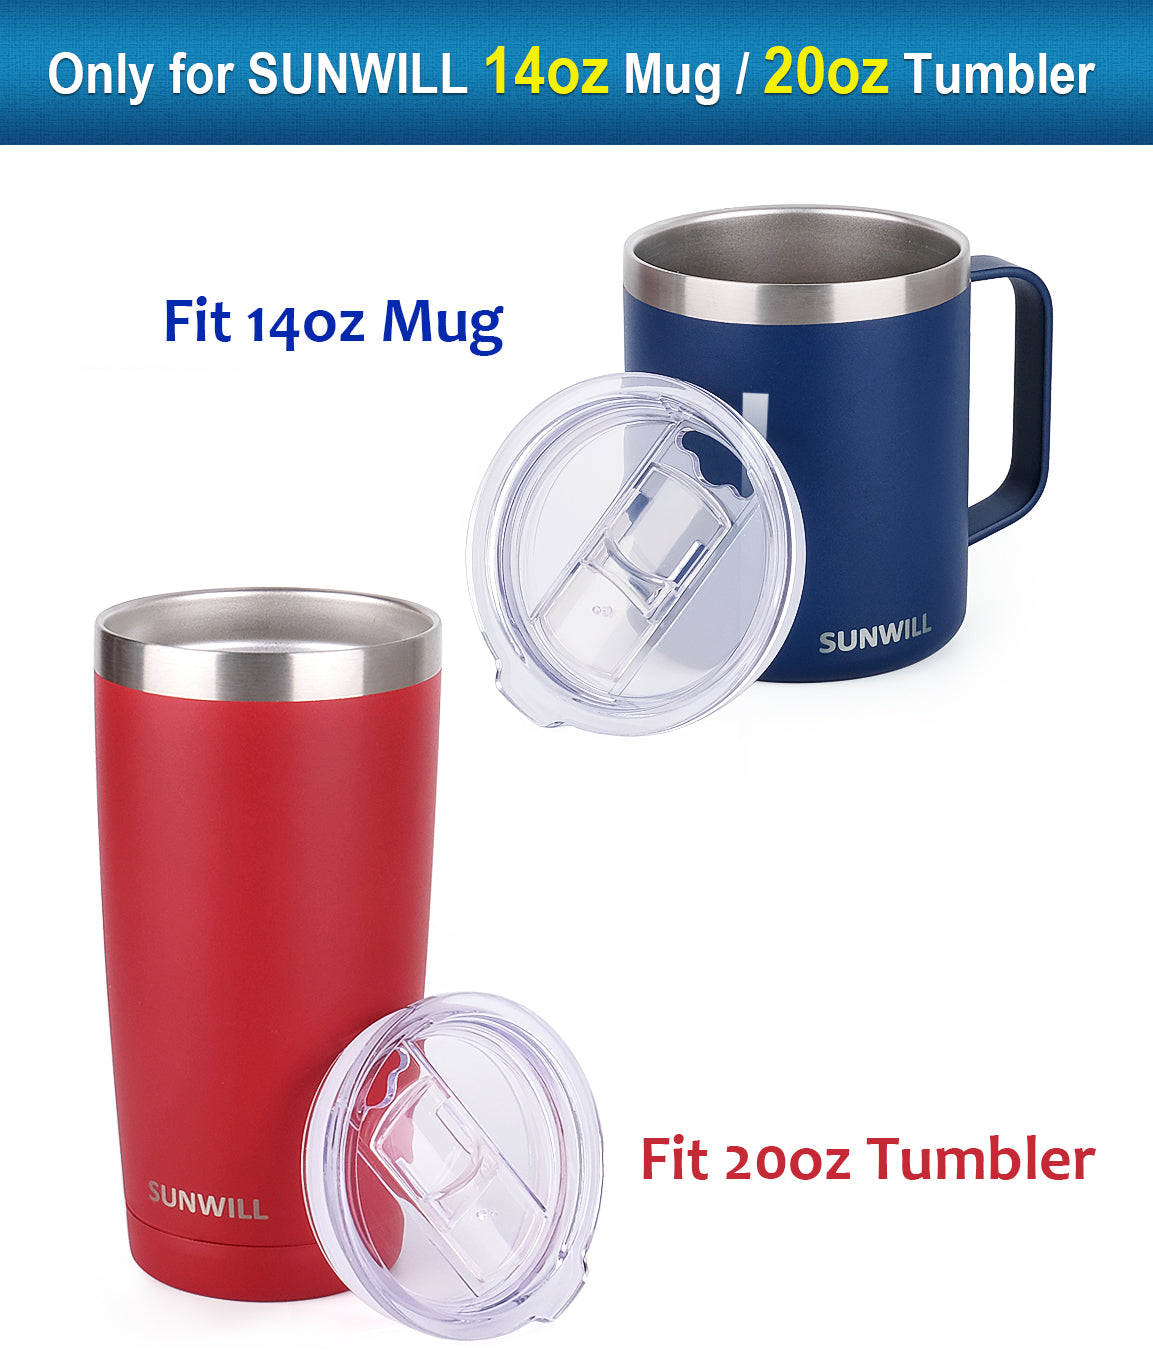 Tumbler Lids - & Replacement Lids For Coffee Mugs, Car Tumblers